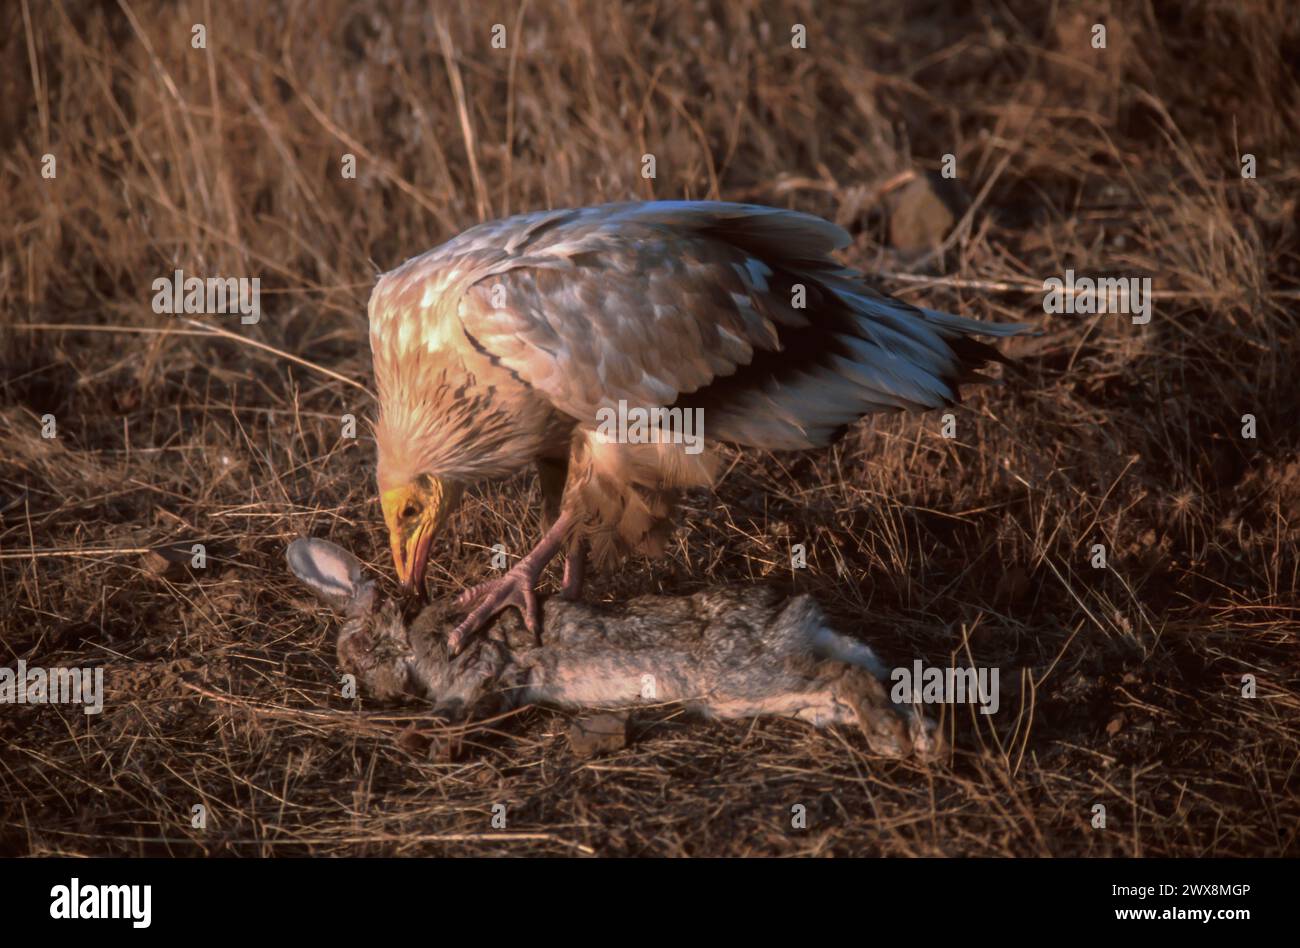 Egyptian Vulture (Neophron percnopterus) eating rabbit Stock Photo